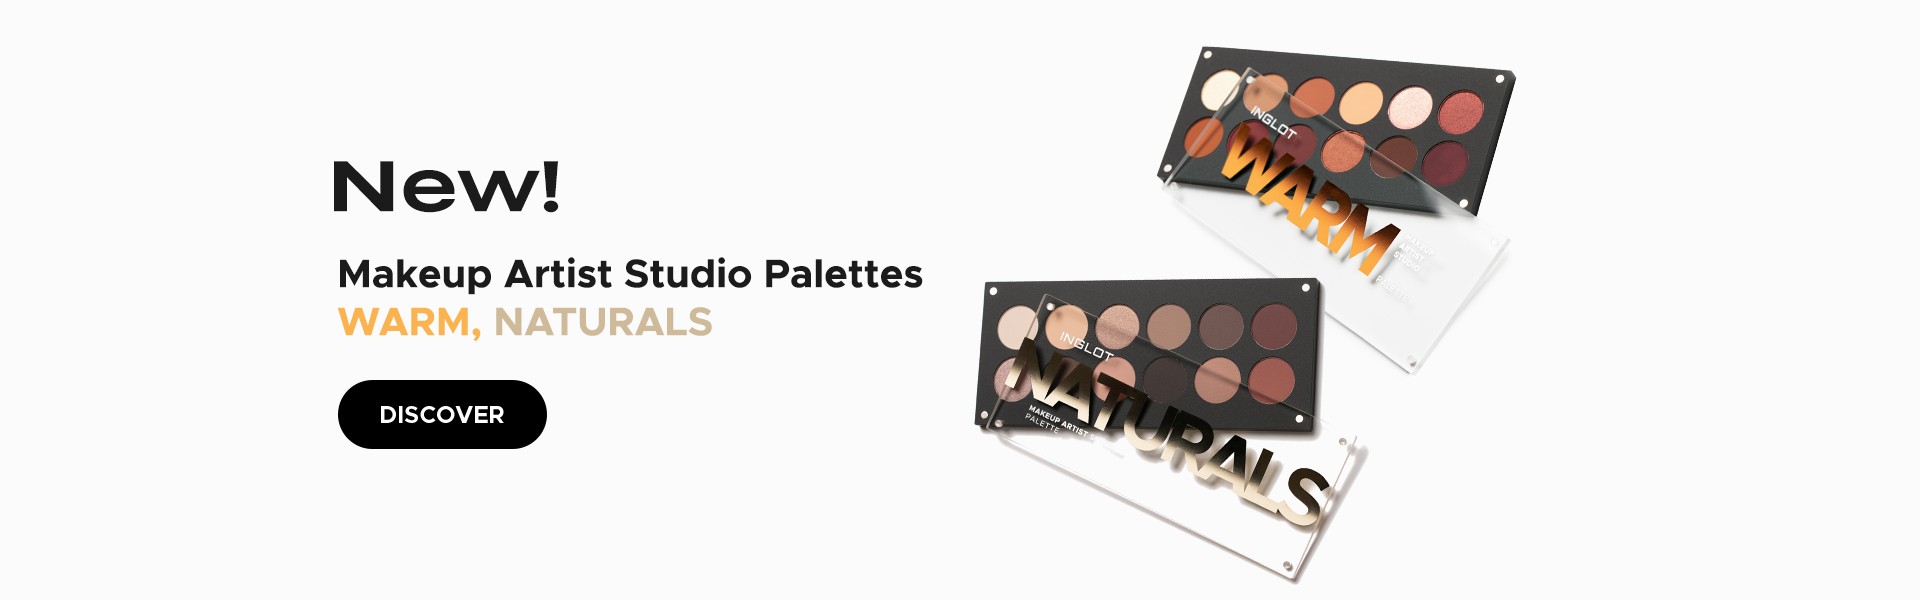 Makeup Artist Studio Palette